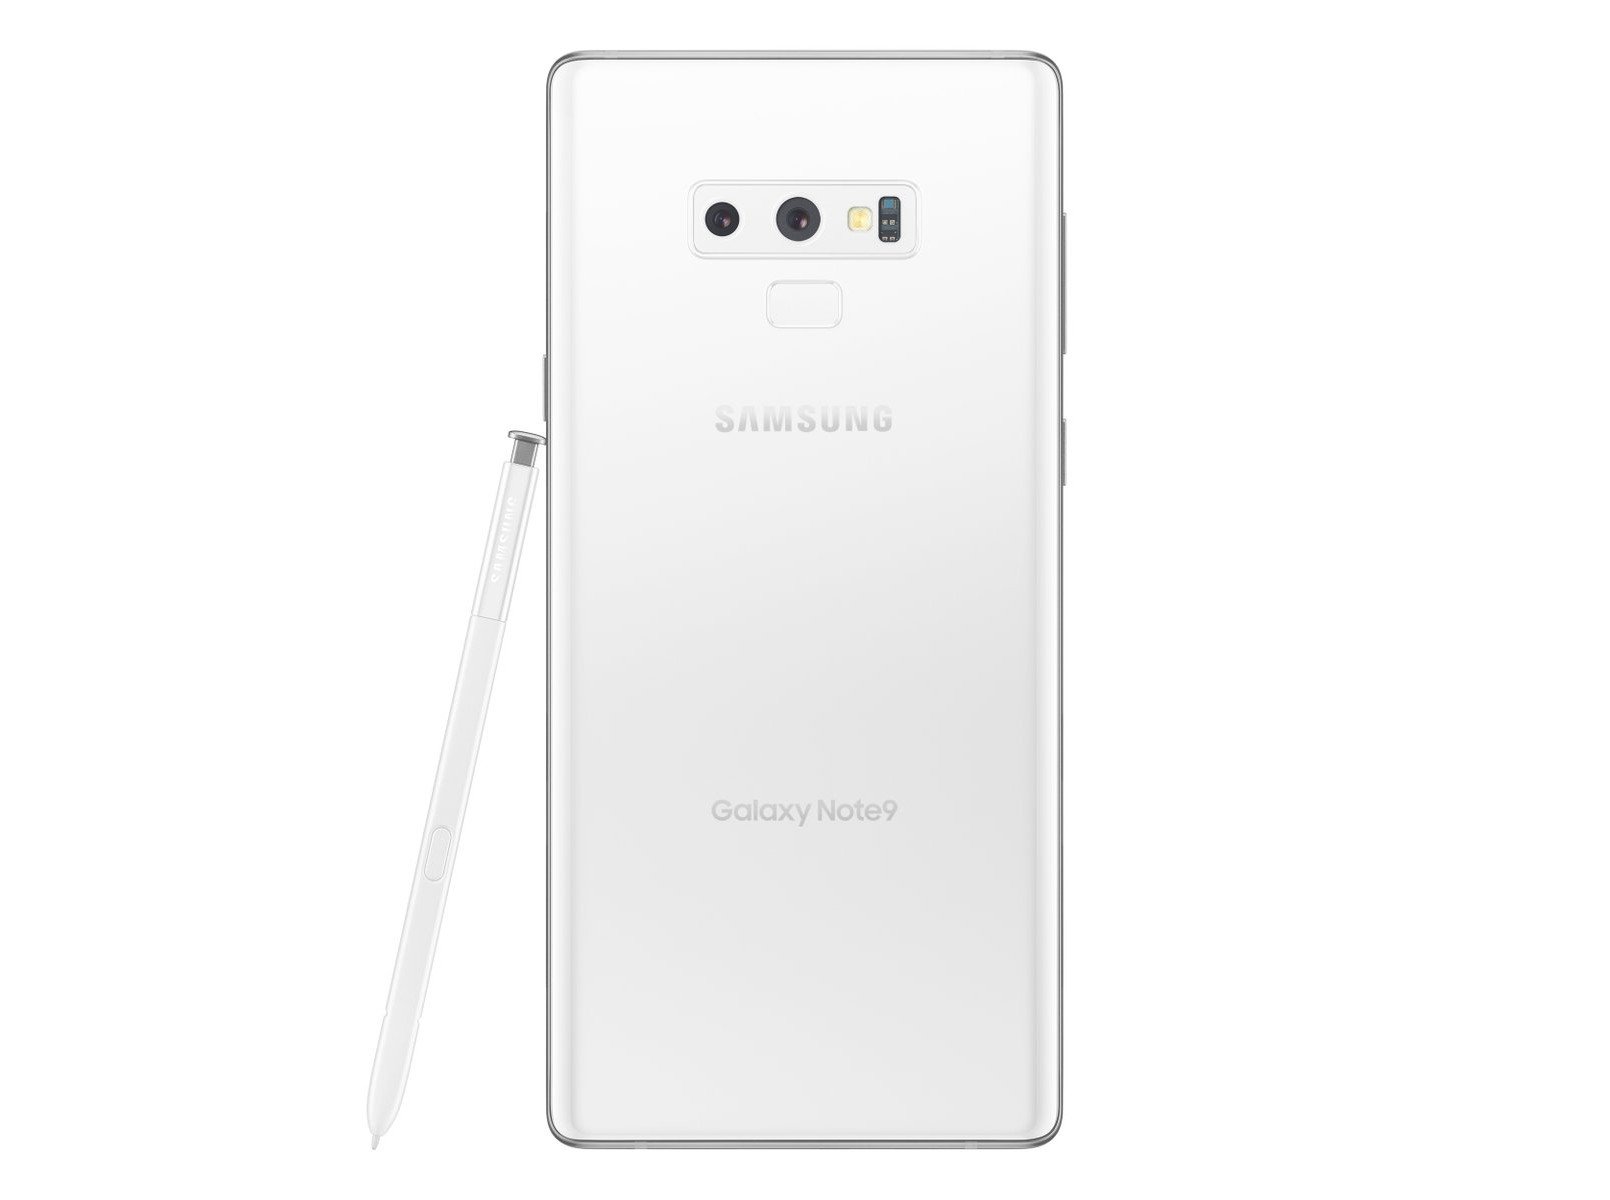 Samsung White